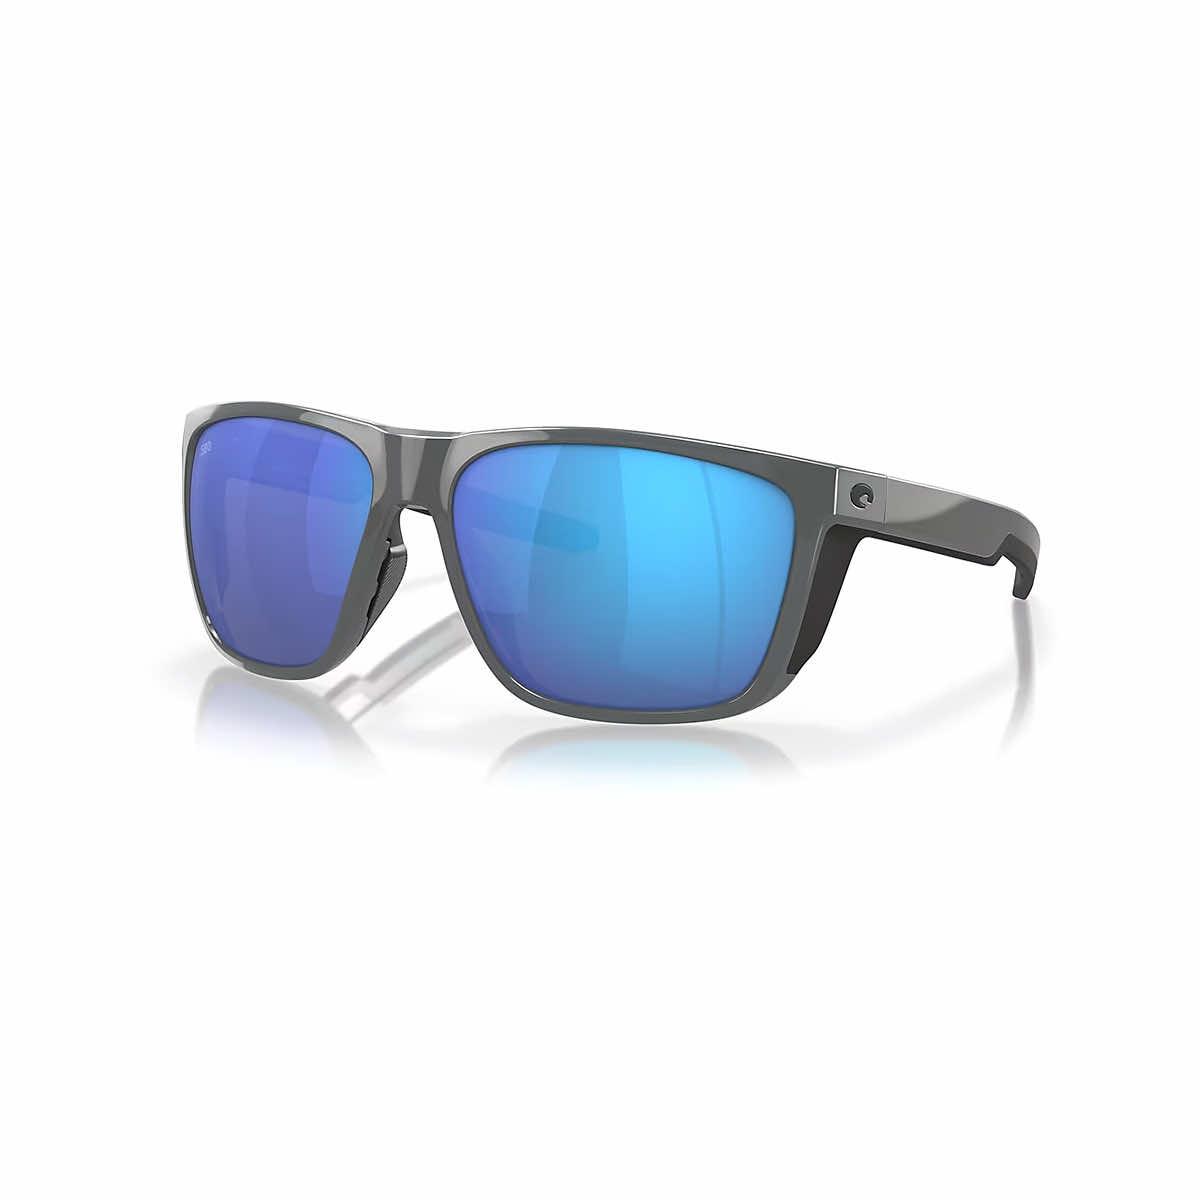  Ferg Xl 580p Sunglasses - Polarized Polycarbonate